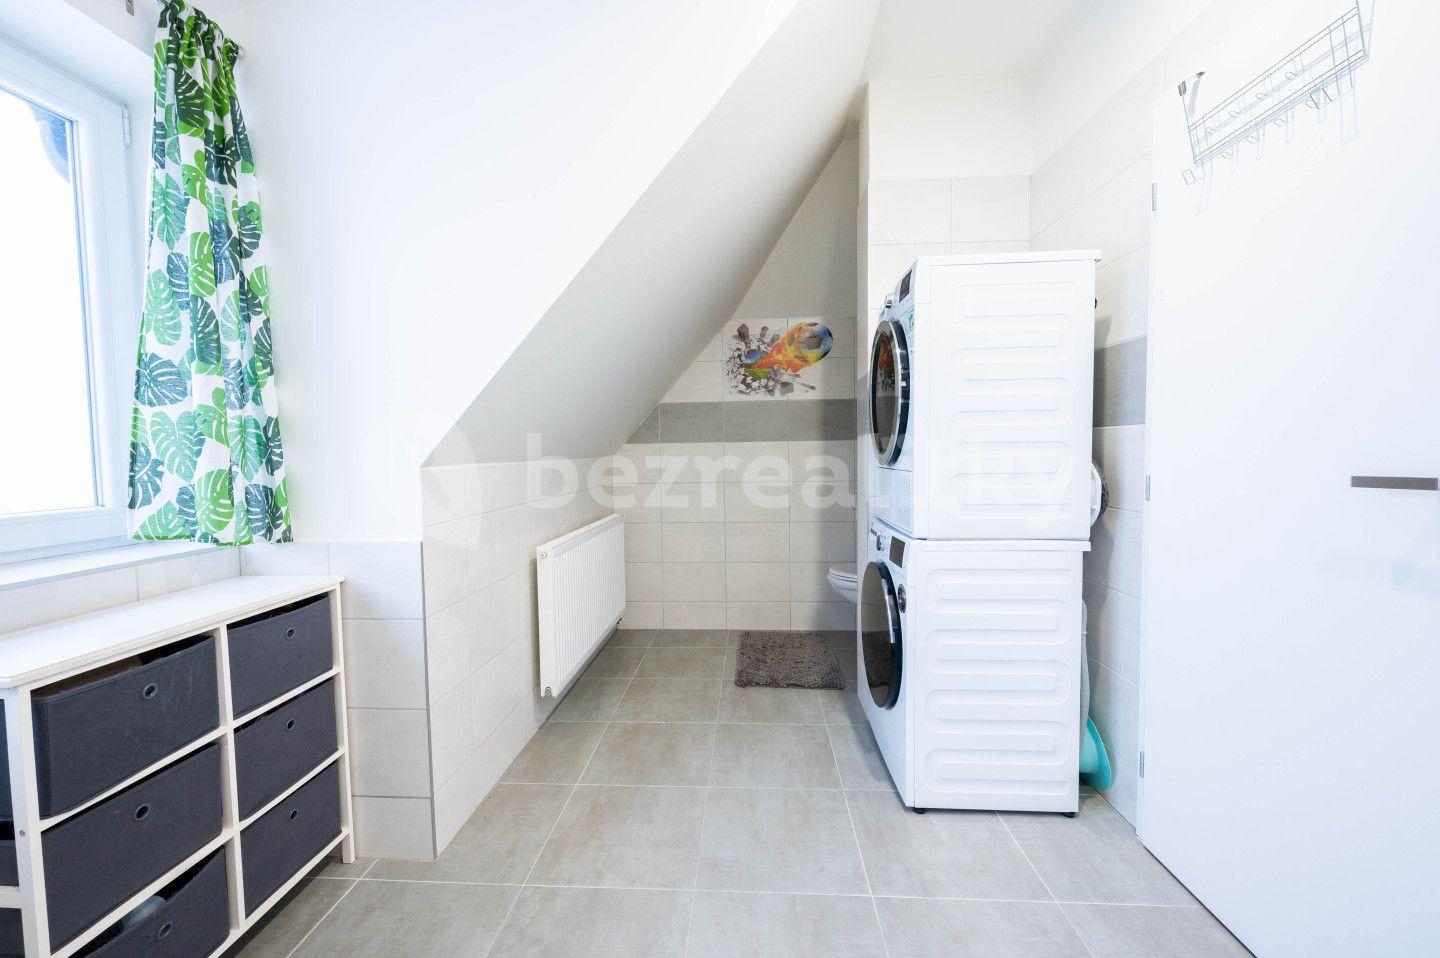 Predaj bytu 3-izbový 93 m², Turistická, Jablonec nad Nisou, Liberecký kraj